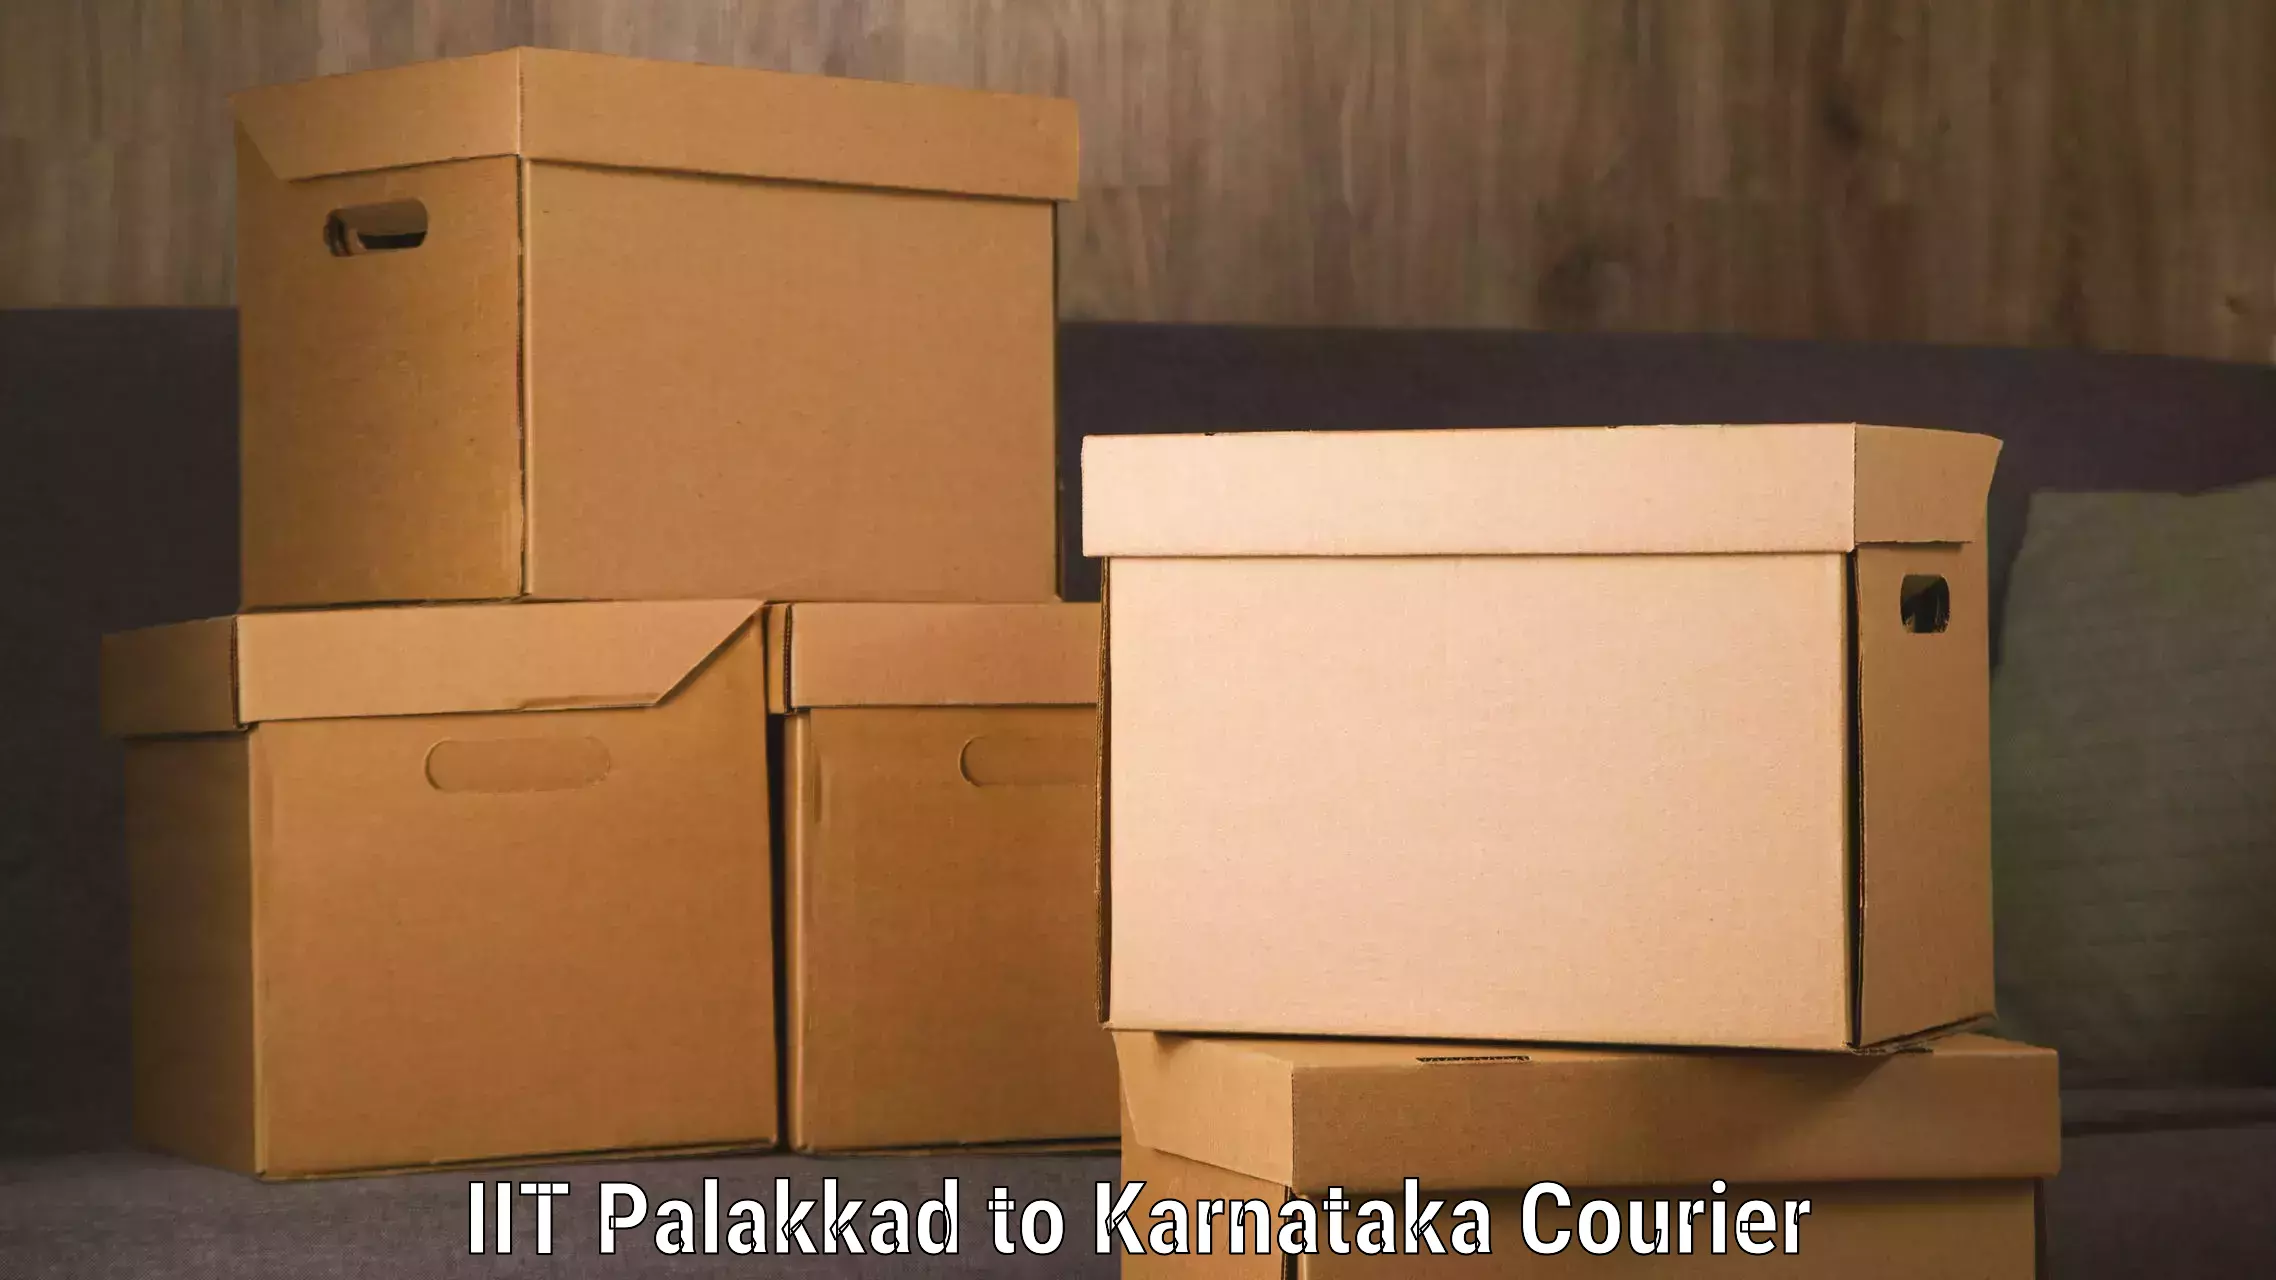 Express mail solutions IIT Palakkad to Saraswathipuram